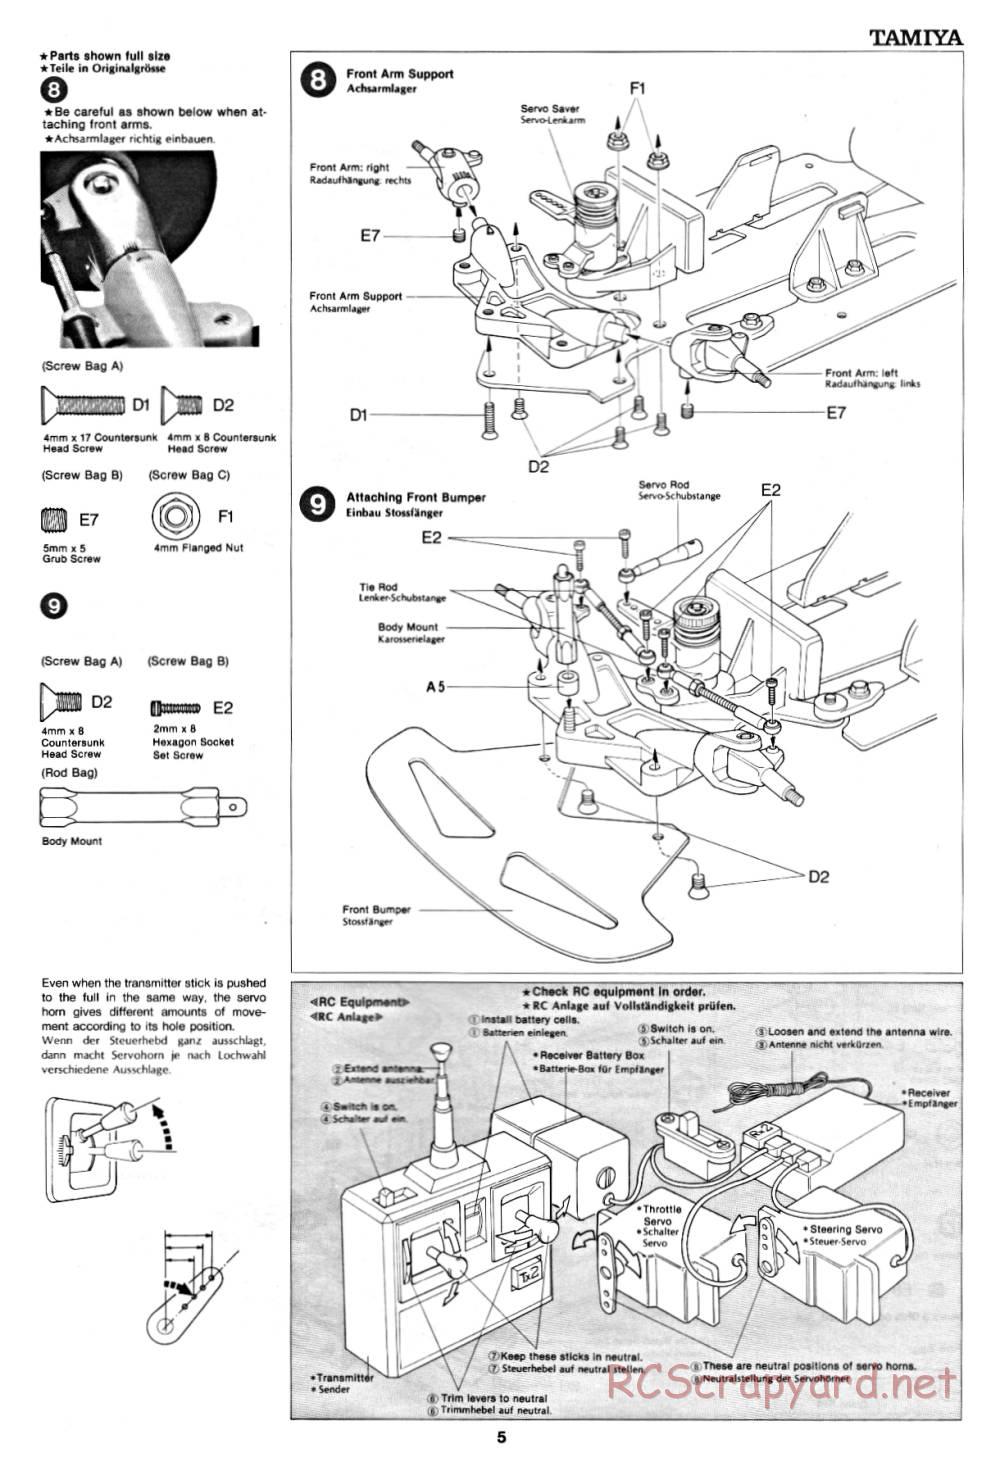 Tamiya - Datsun 280ZX - 58022 - Manual - Page 5